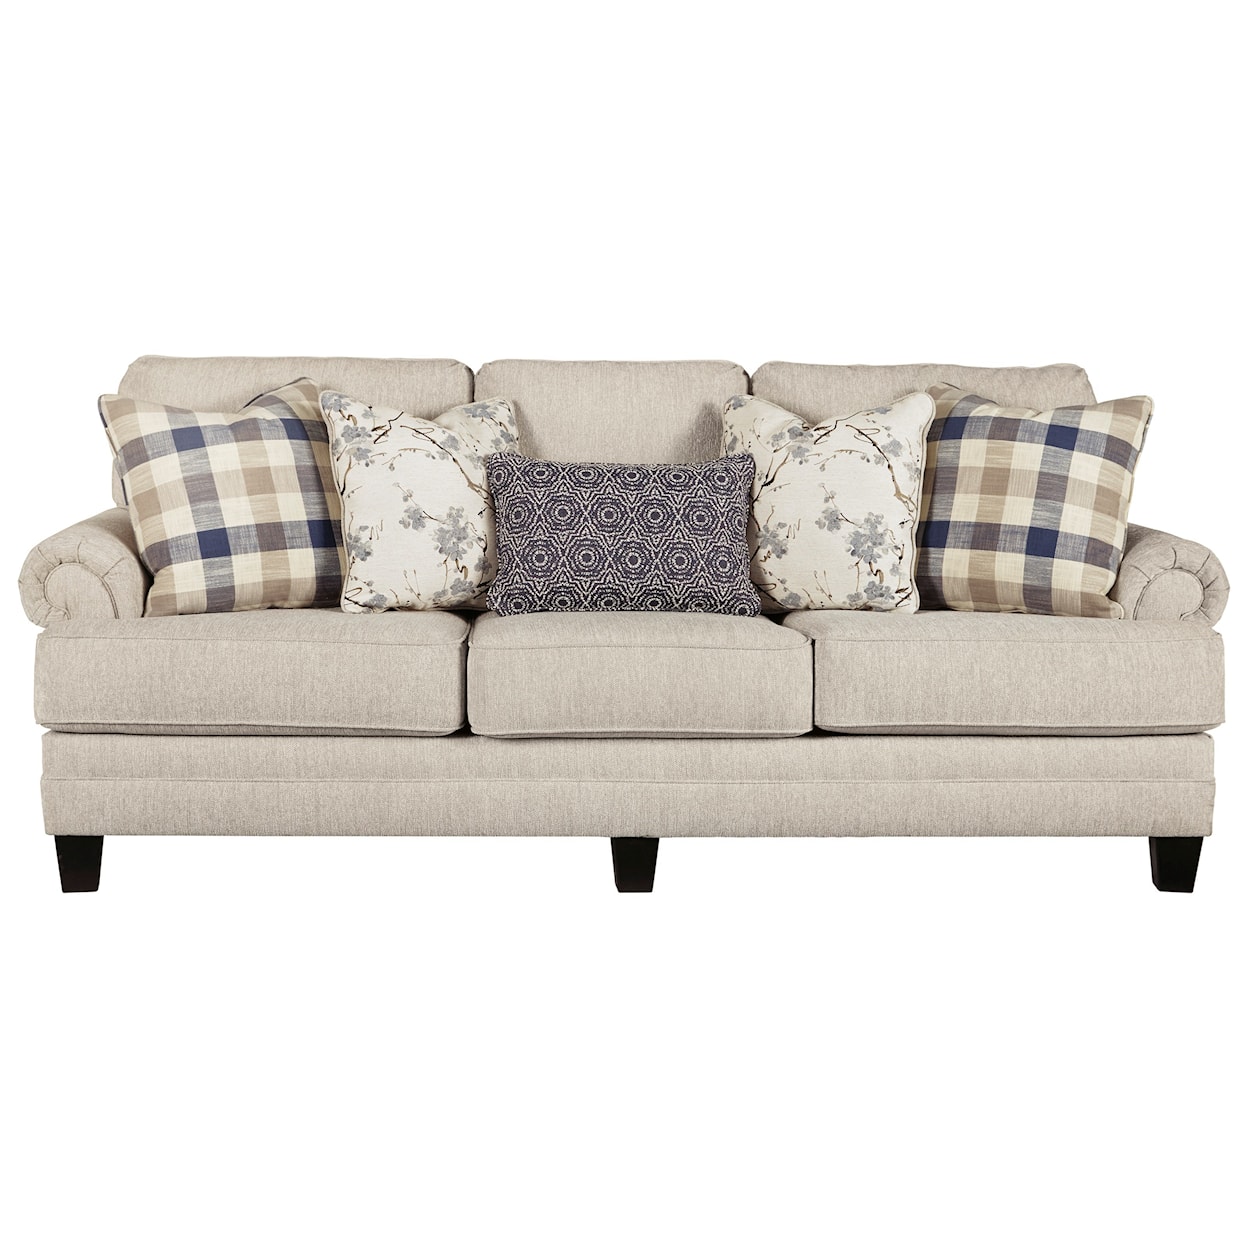 Ashley Furniture Benchcraft Meggett Sofa